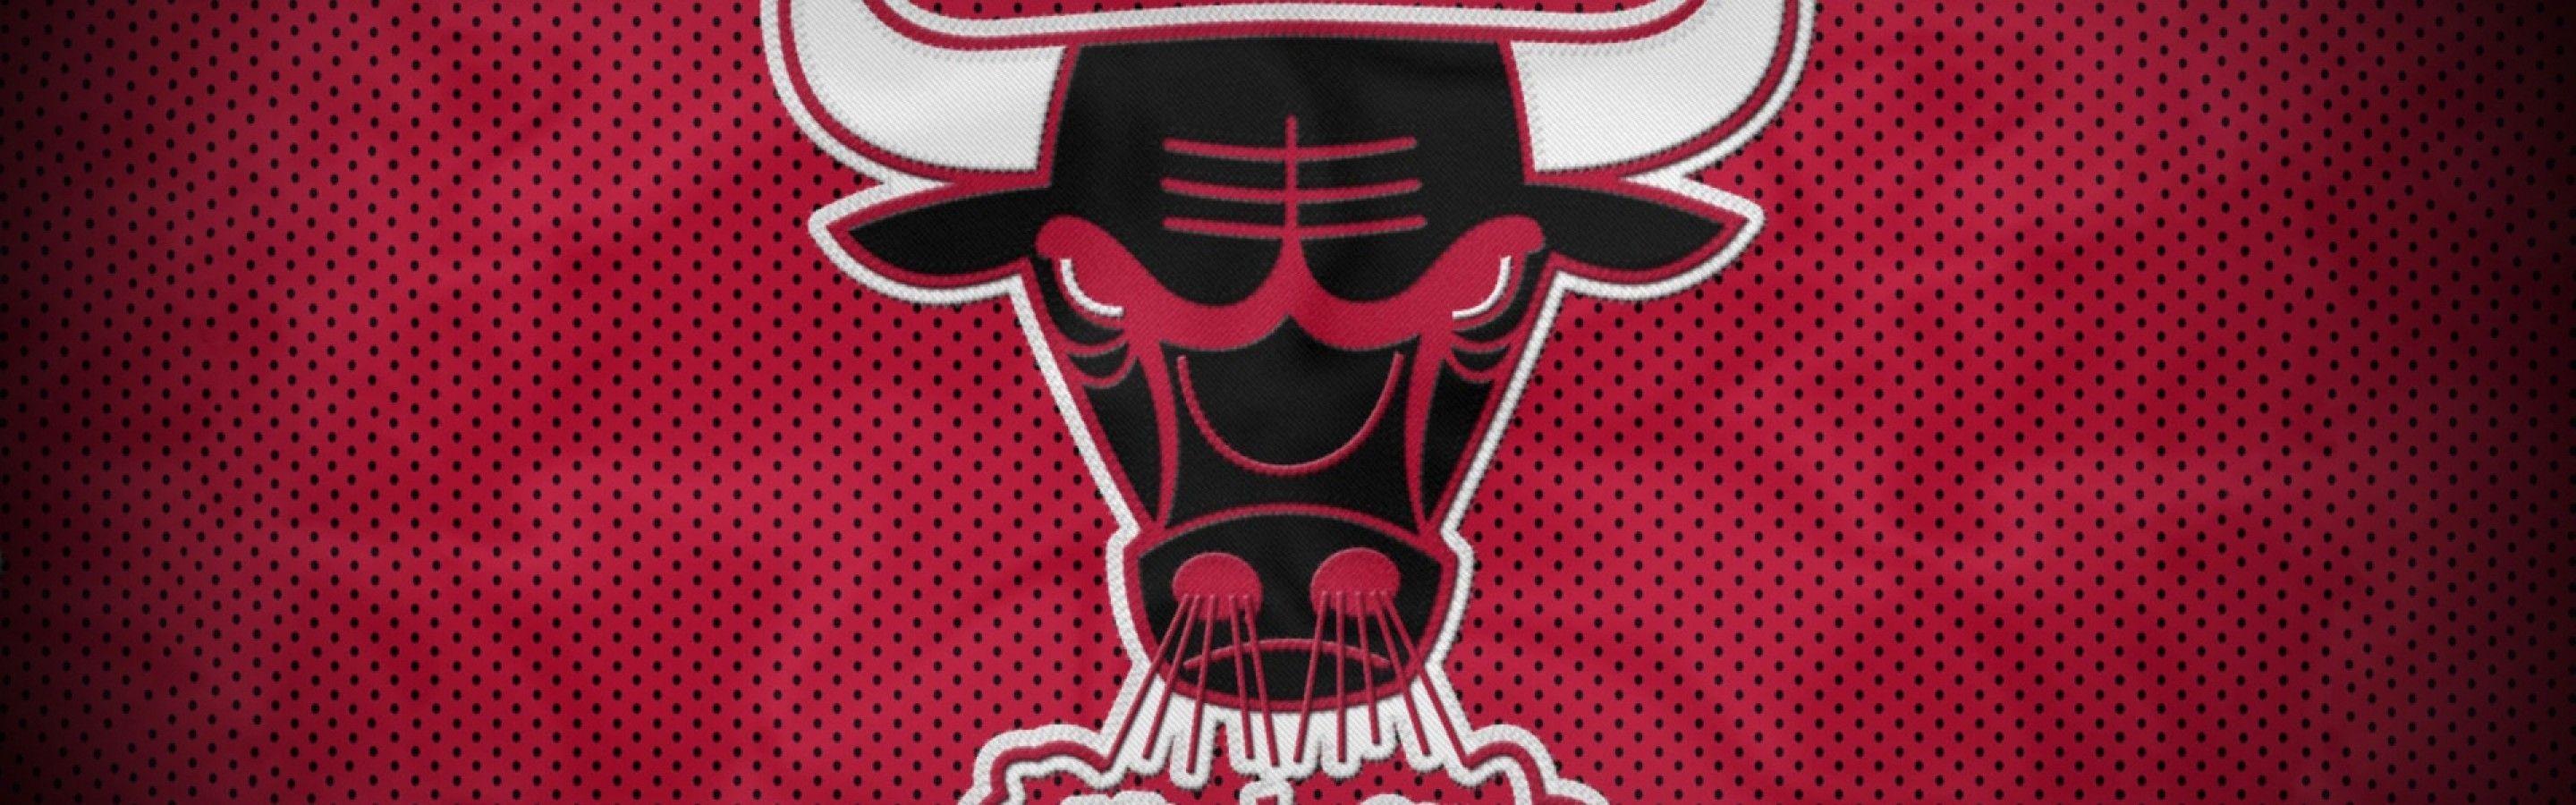 Chicago Bulls Logo 72 99375 Image HD Wallpaper. Wallfoy.com